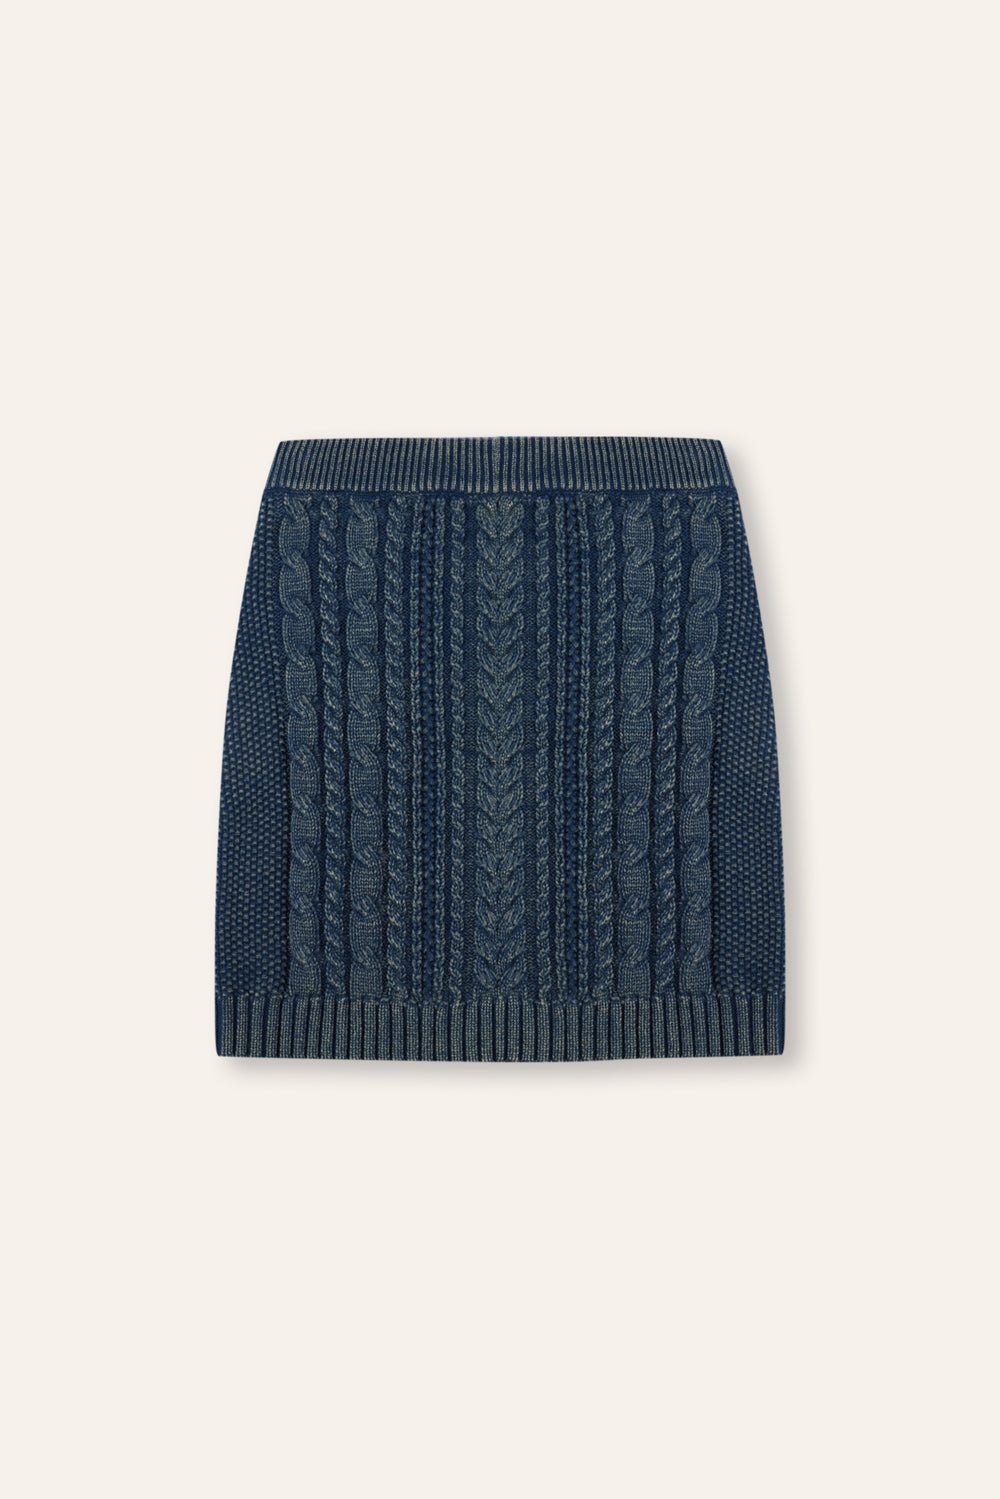 GANI cotton mini skirt (Denim blue) - STELLAM